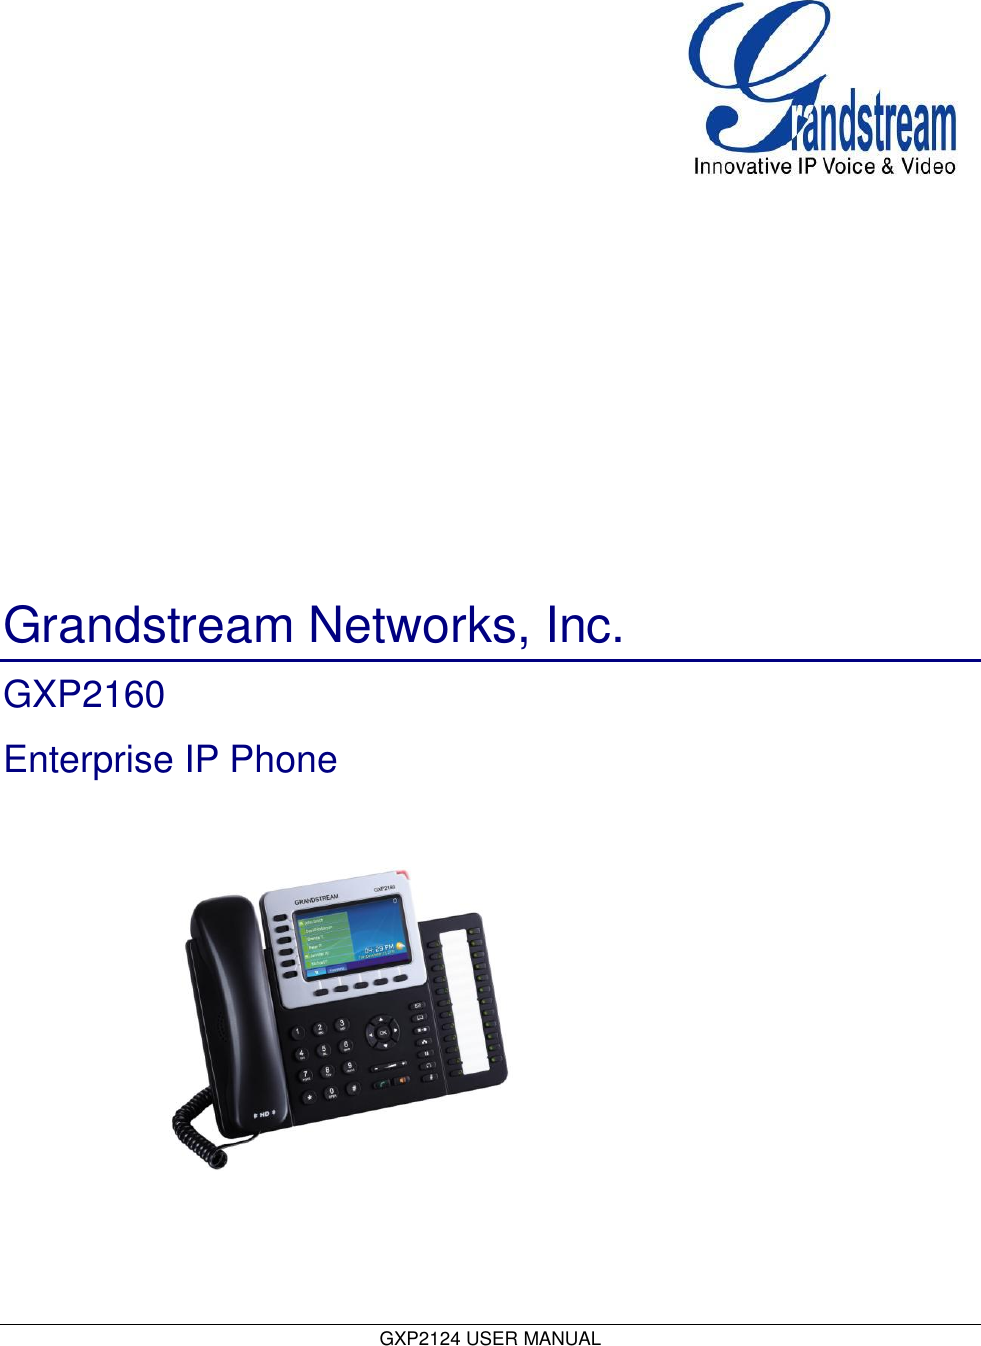  GXP2124 USER MANUAL                                                 Grandstream Networks, Inc. GXP2160 Enterprise IP Phone                   